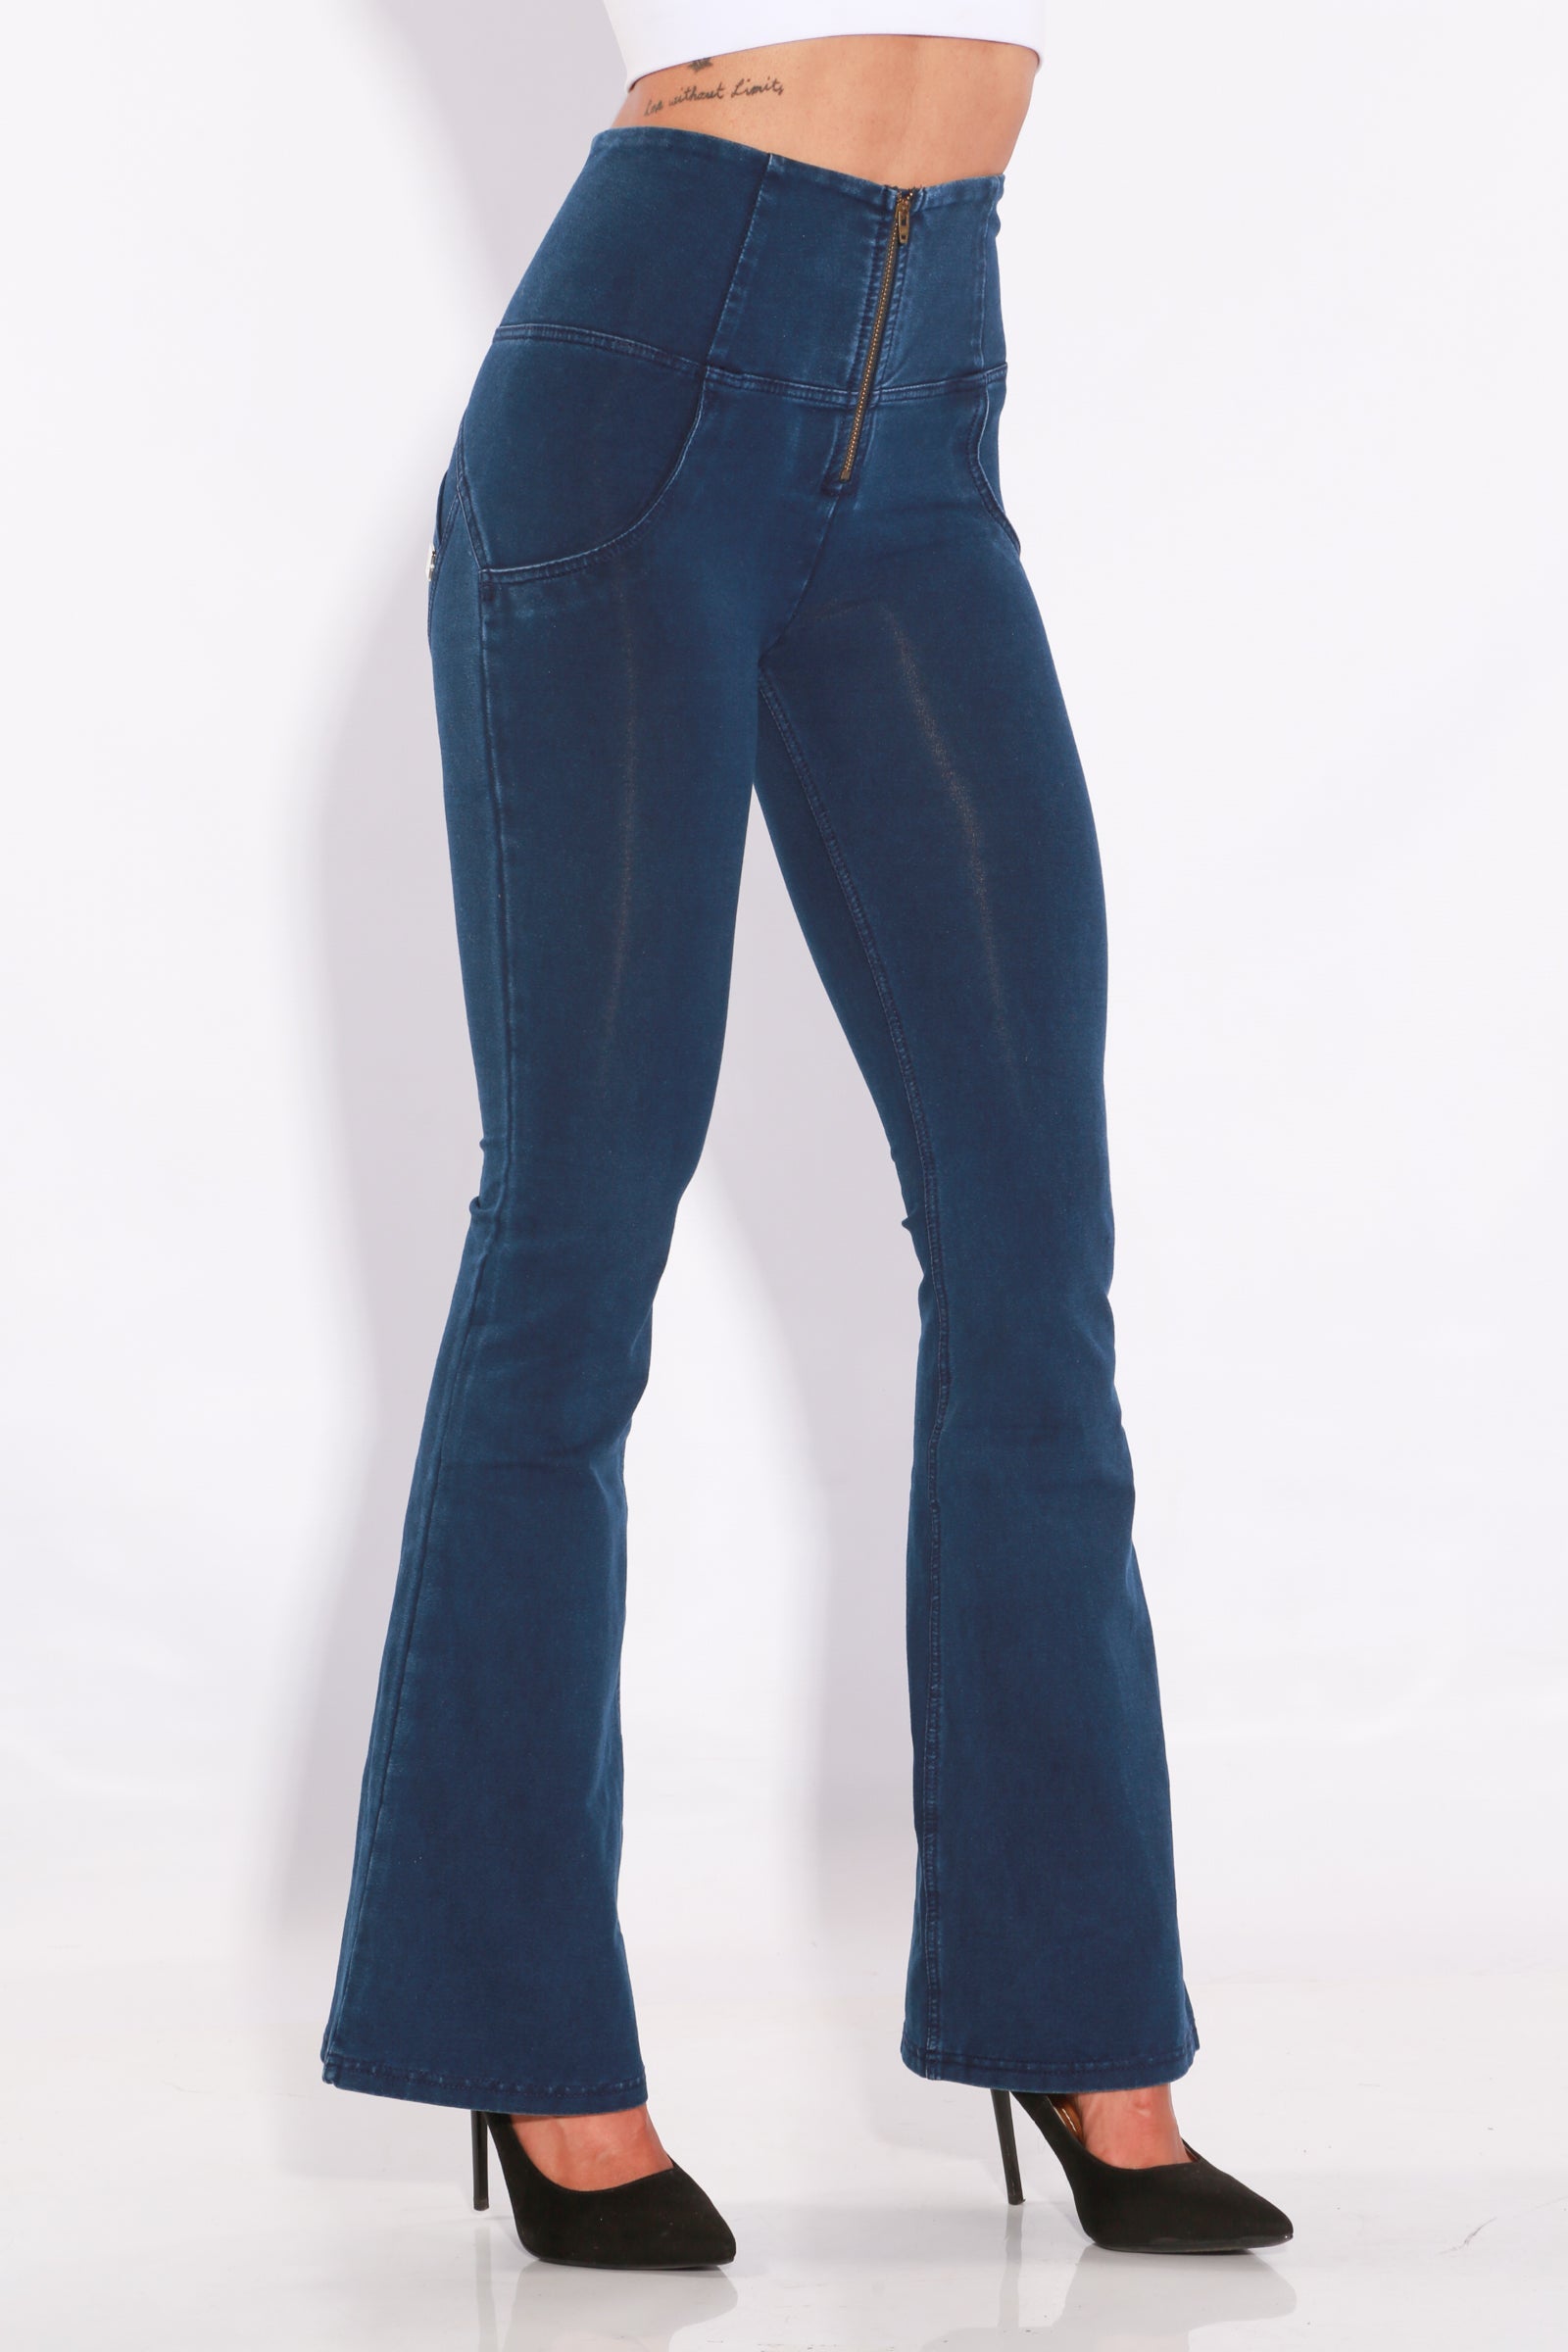 High waist Butt lifting Shaping jeans/Jeggings - Light blue